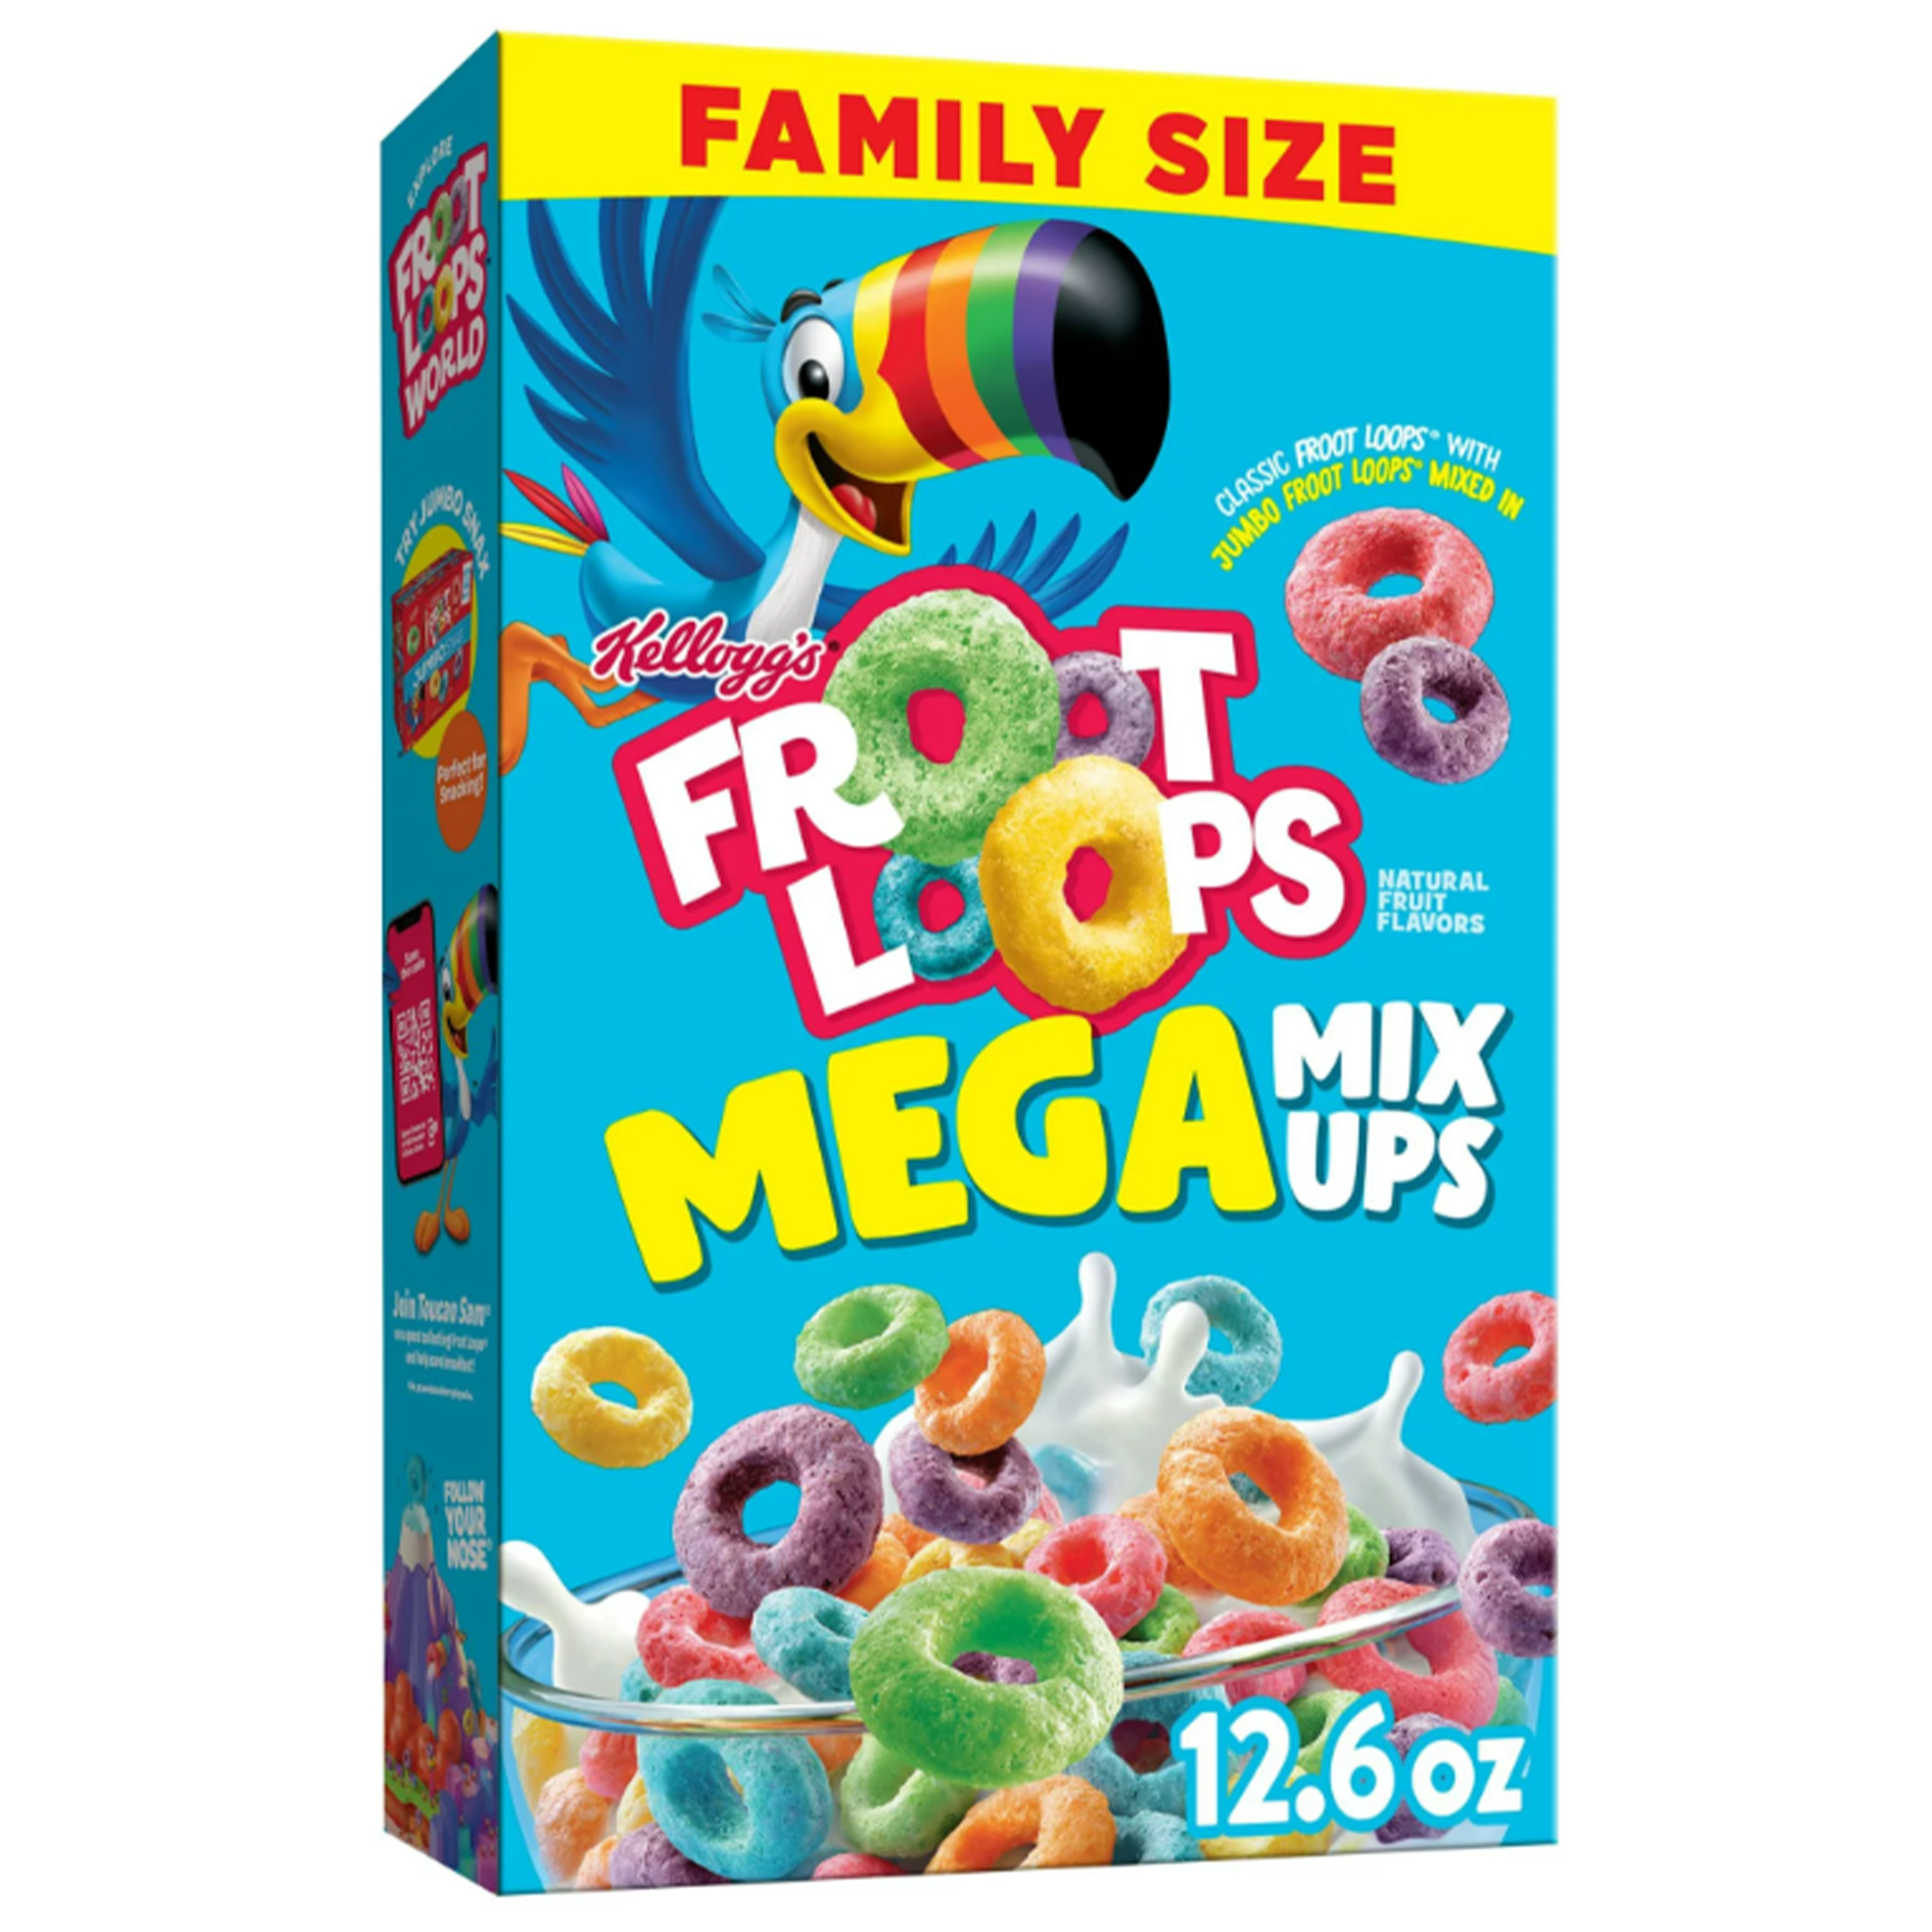 Froot Loops - Mega Mix-Ups - Family Size